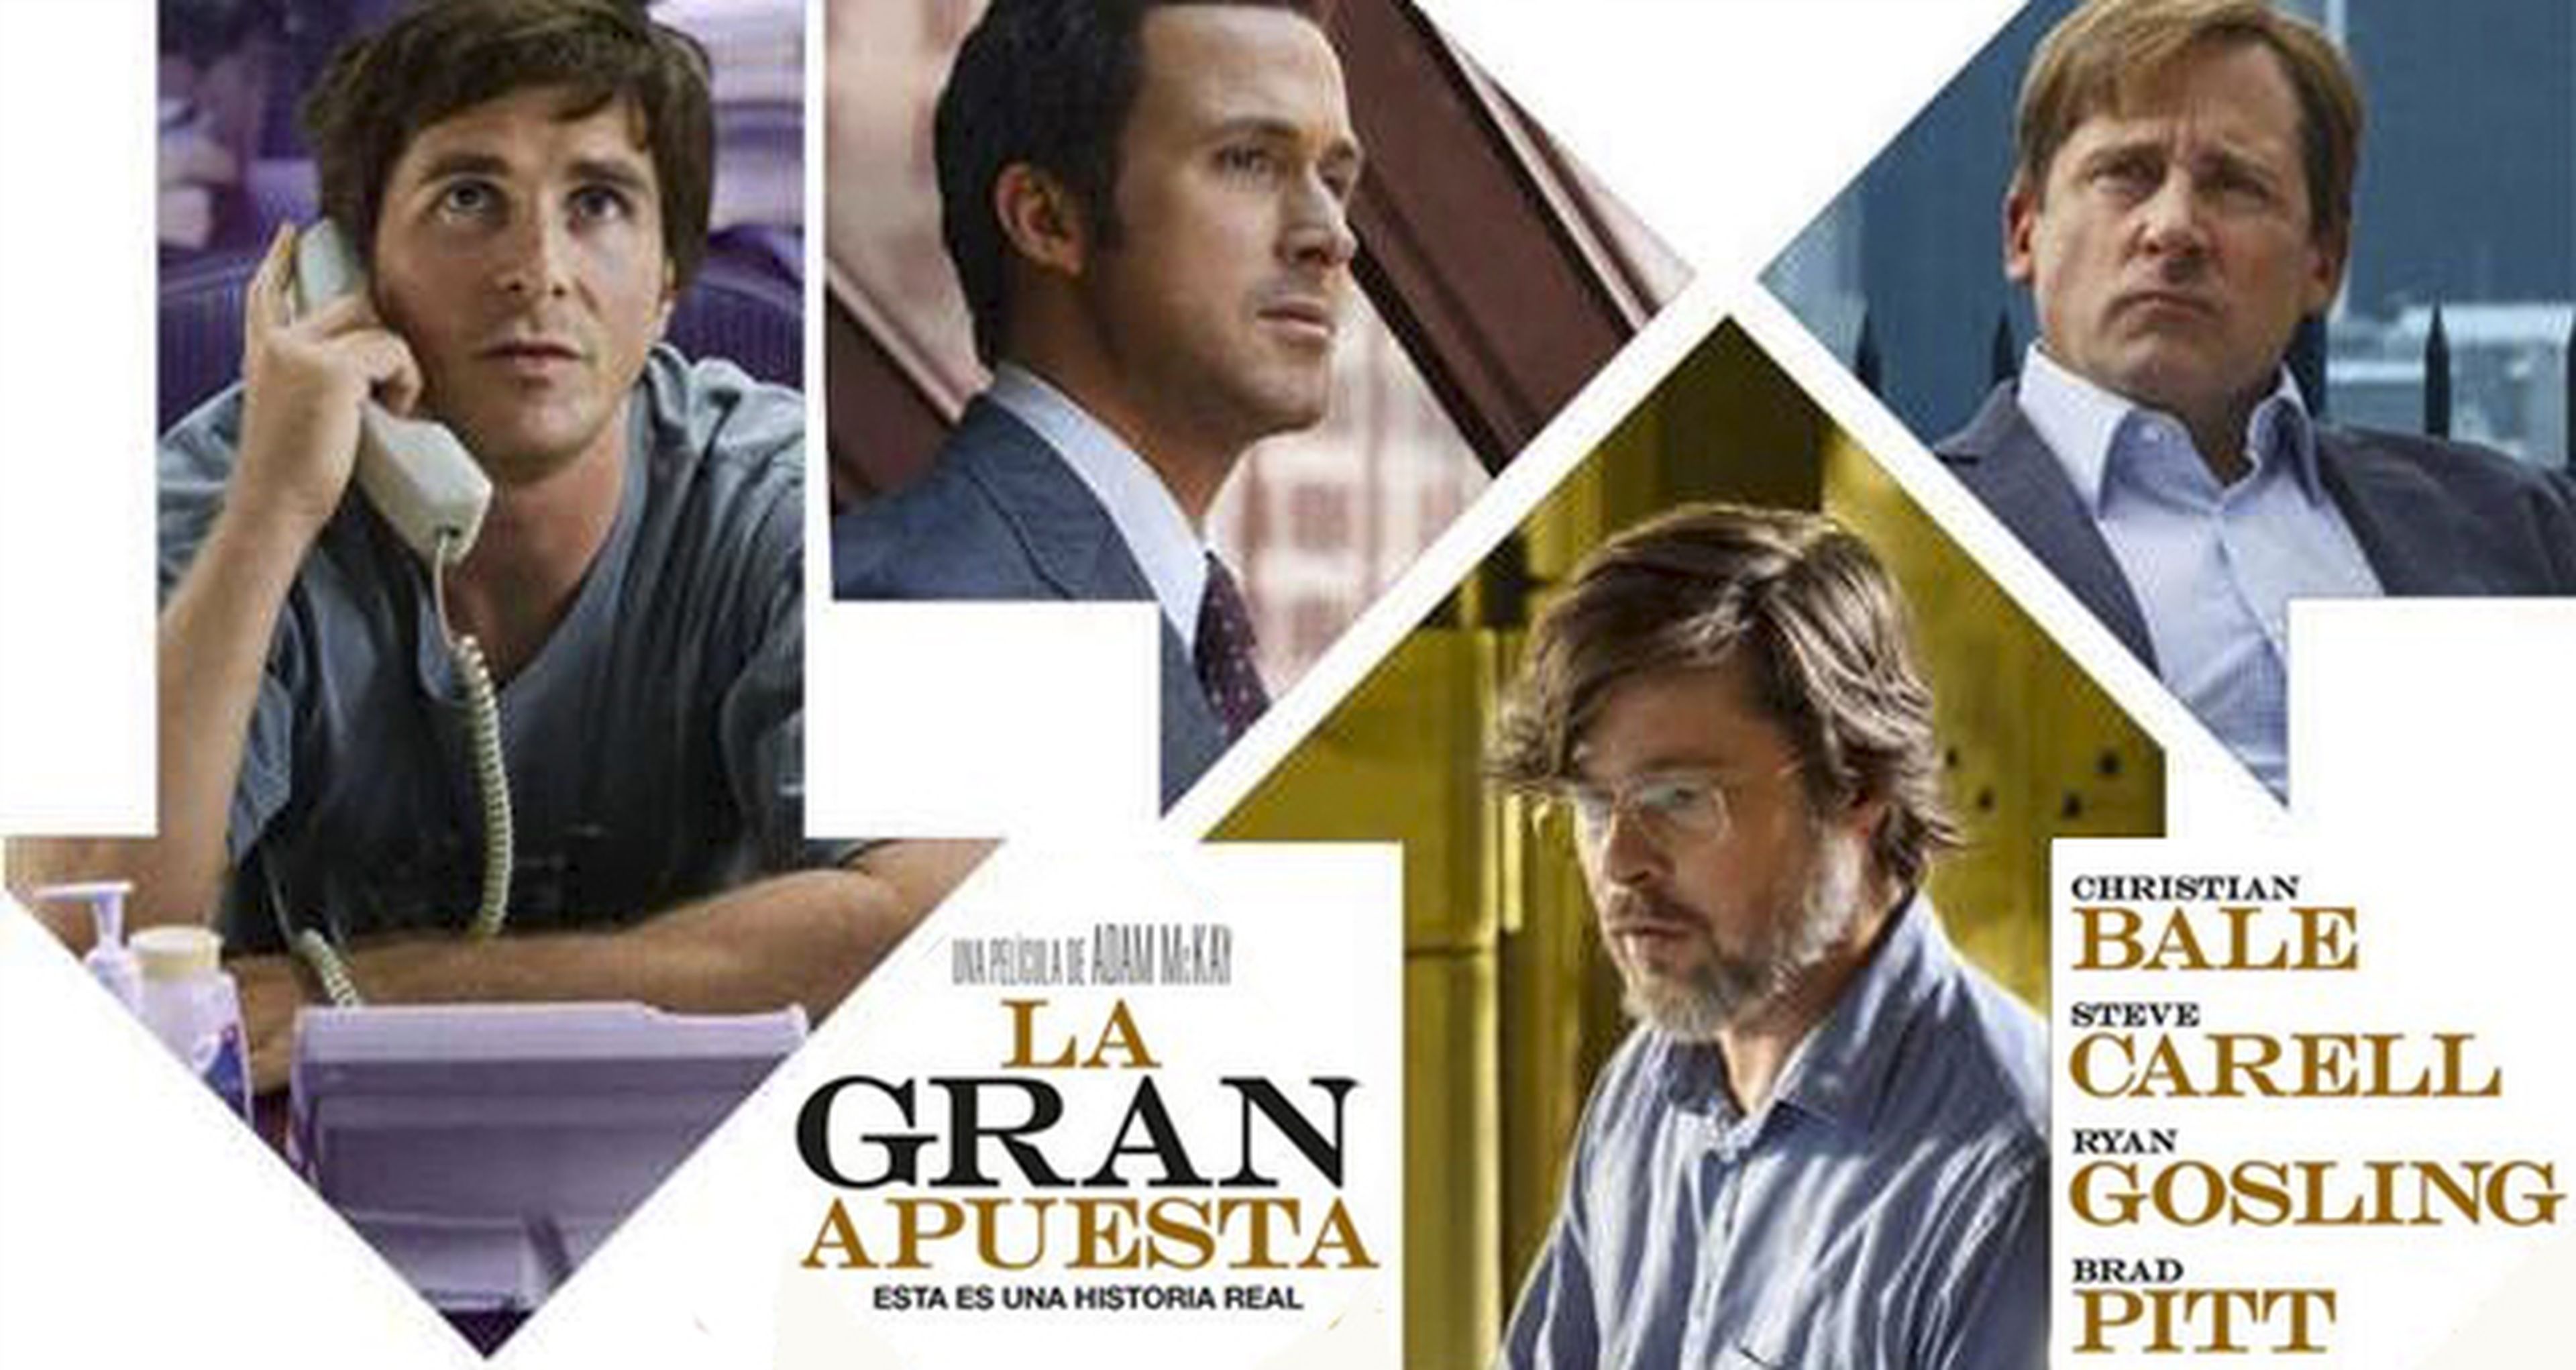 La gran apuesta - Crítica del film de Brad Pitt, Ryan Gosling, Christian Bale y Steve Carell